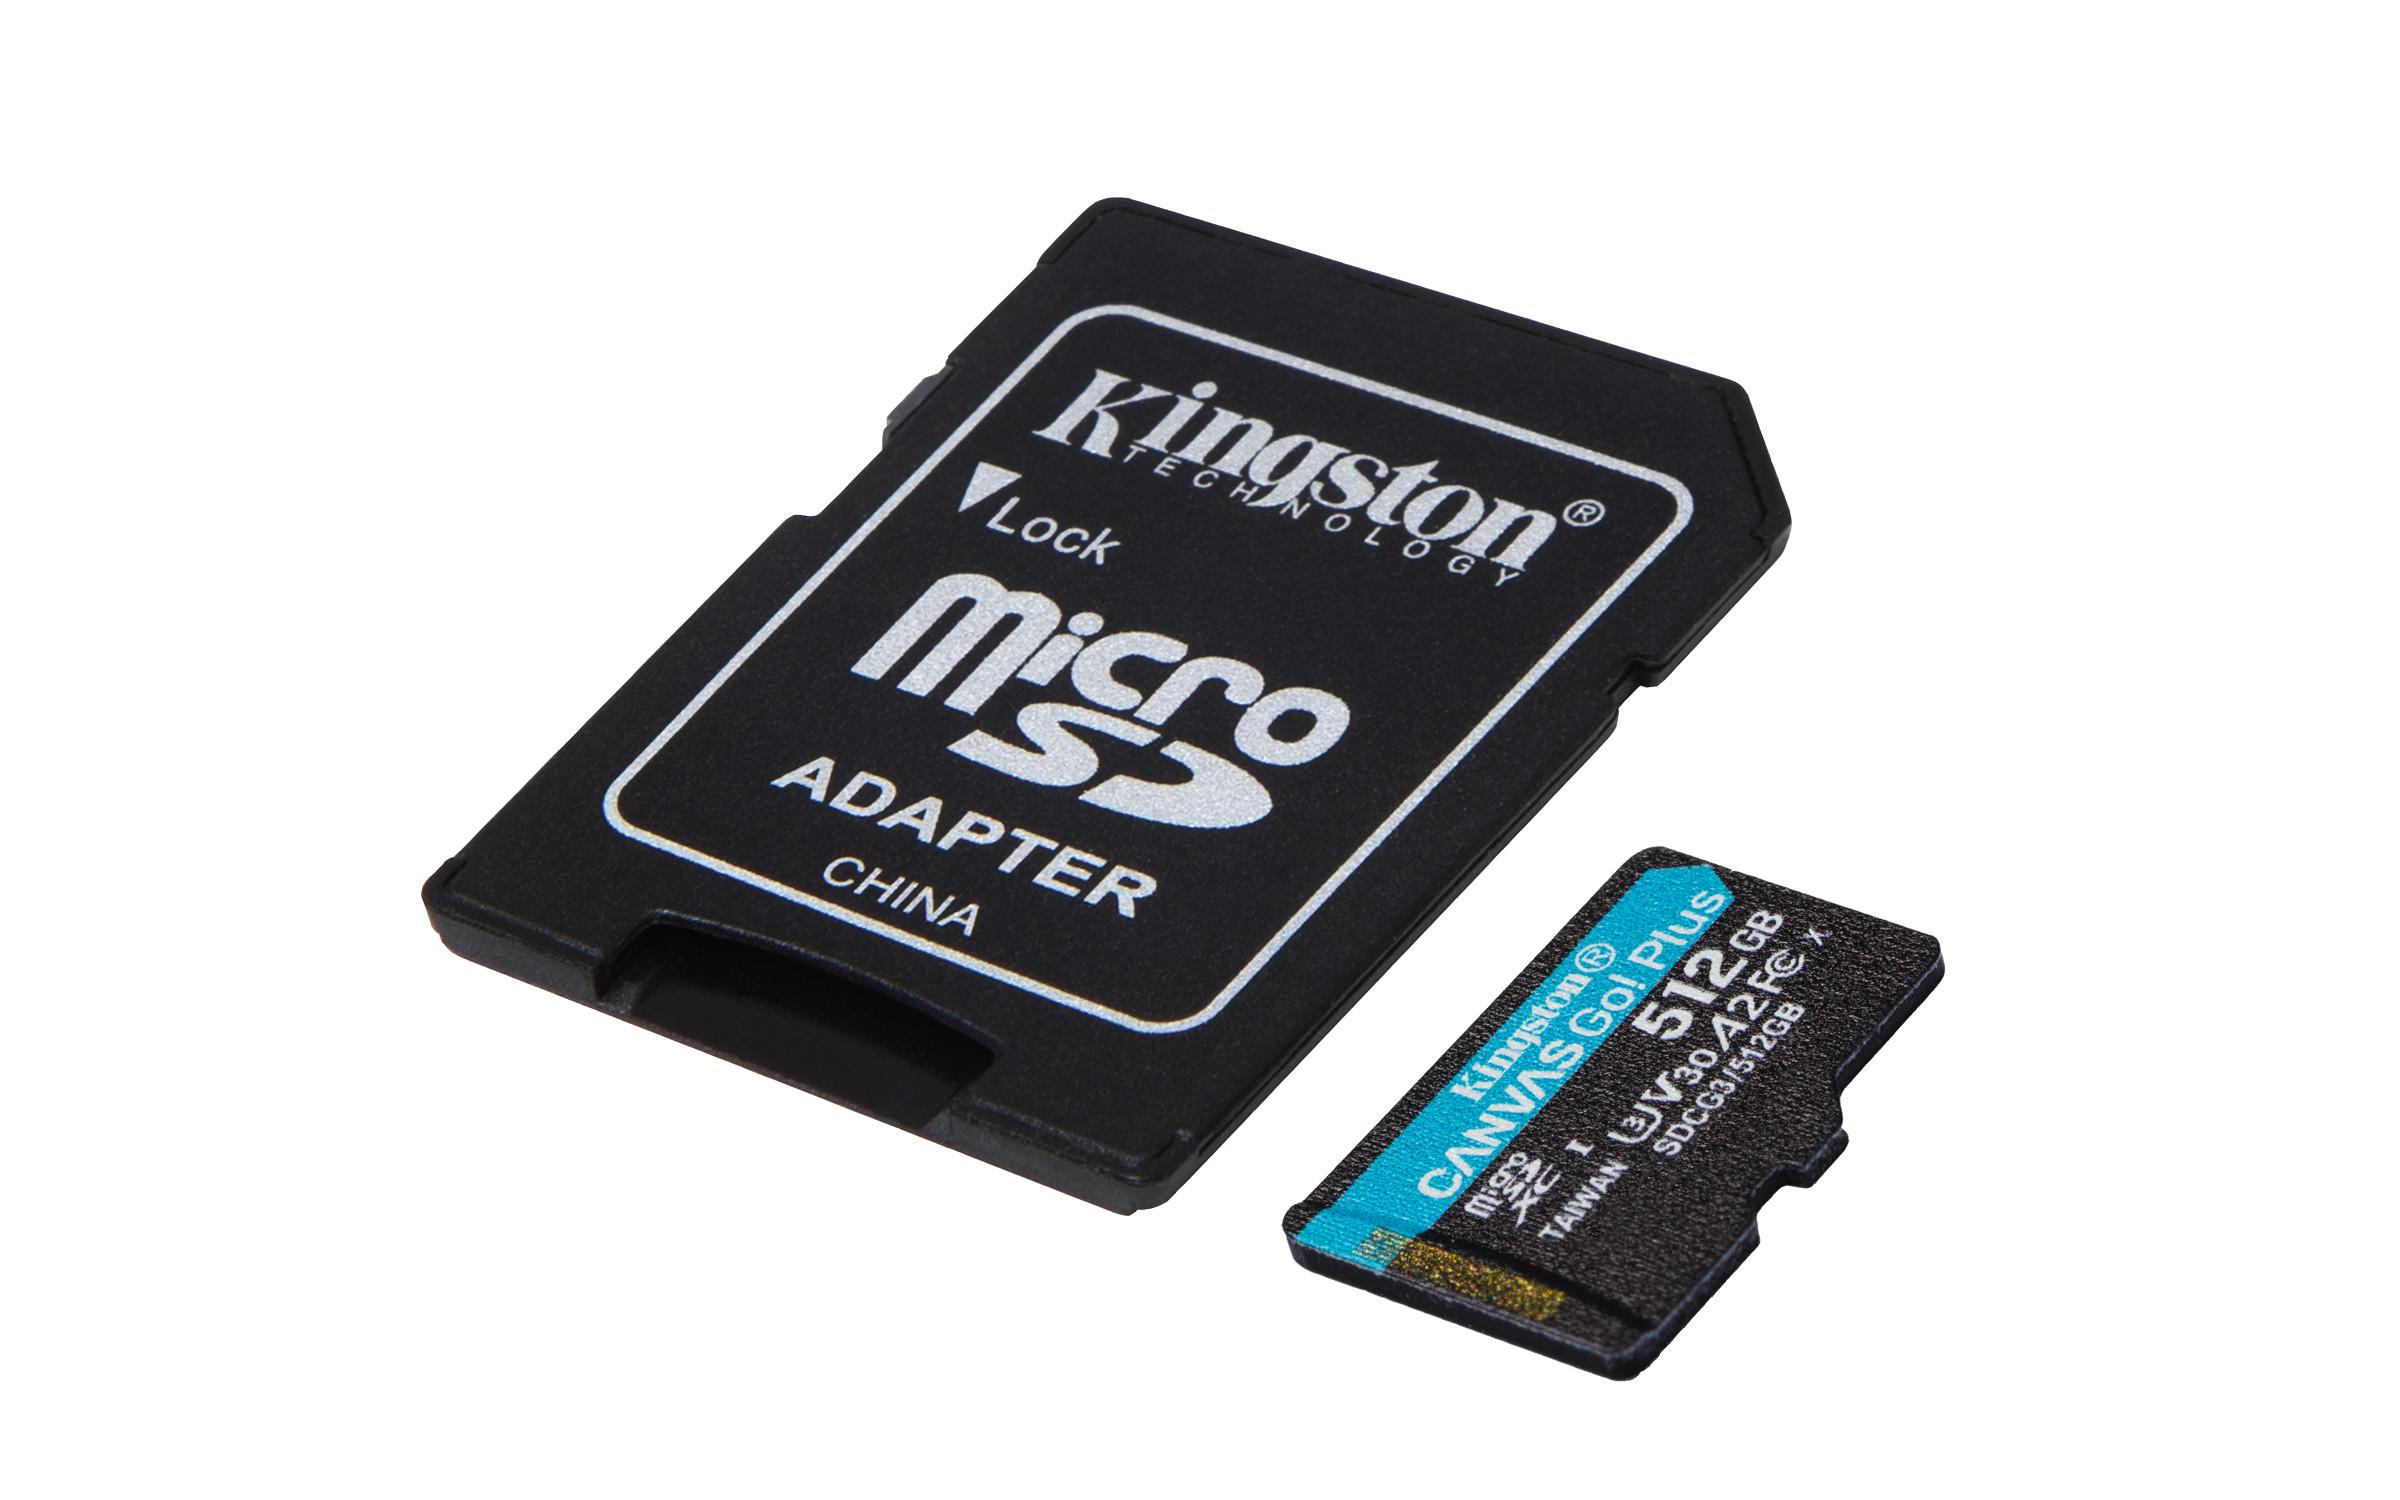 Kingston  Canvas Go Plus (microSDXC, 512GB, U3, UHS-I) 